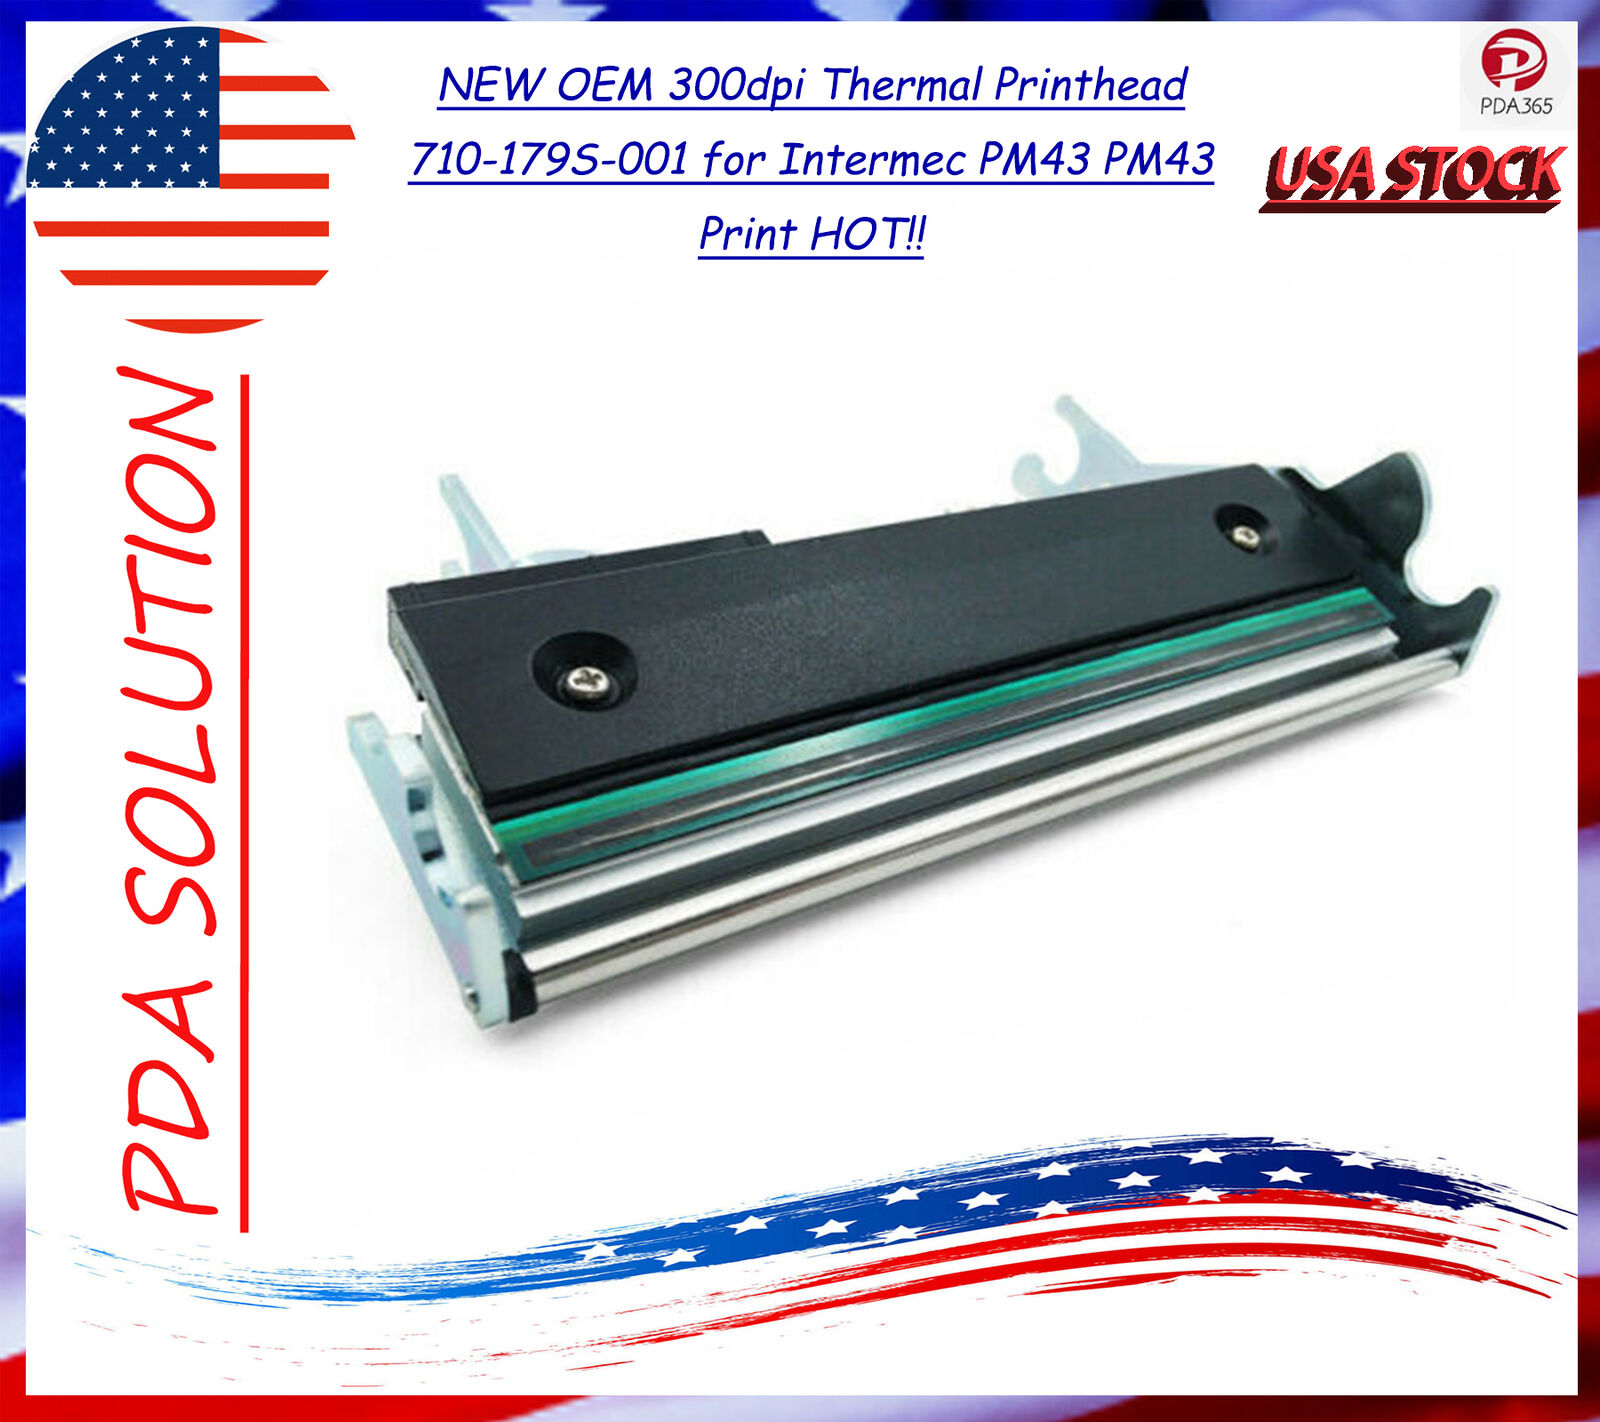 NEW OEM 300dpi Thermal Printhead 710-179S-001 for Intermec PM43 PM43 Print HOT